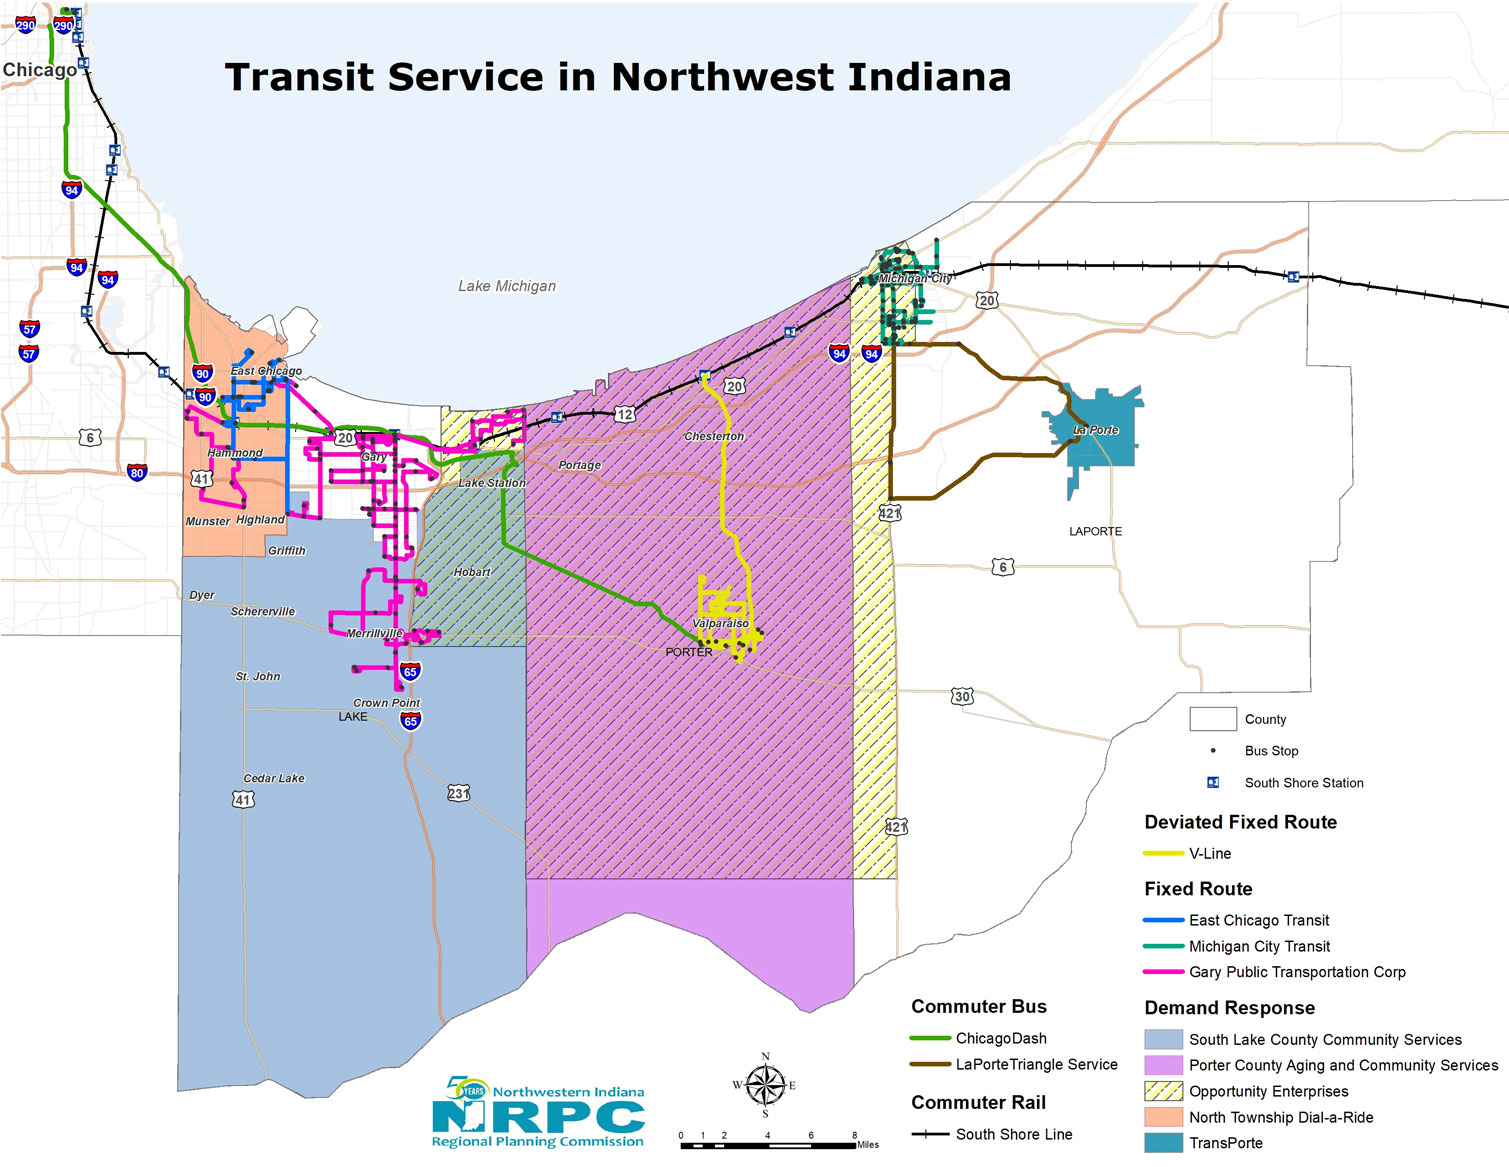 Transit Services in Northwest Indiana